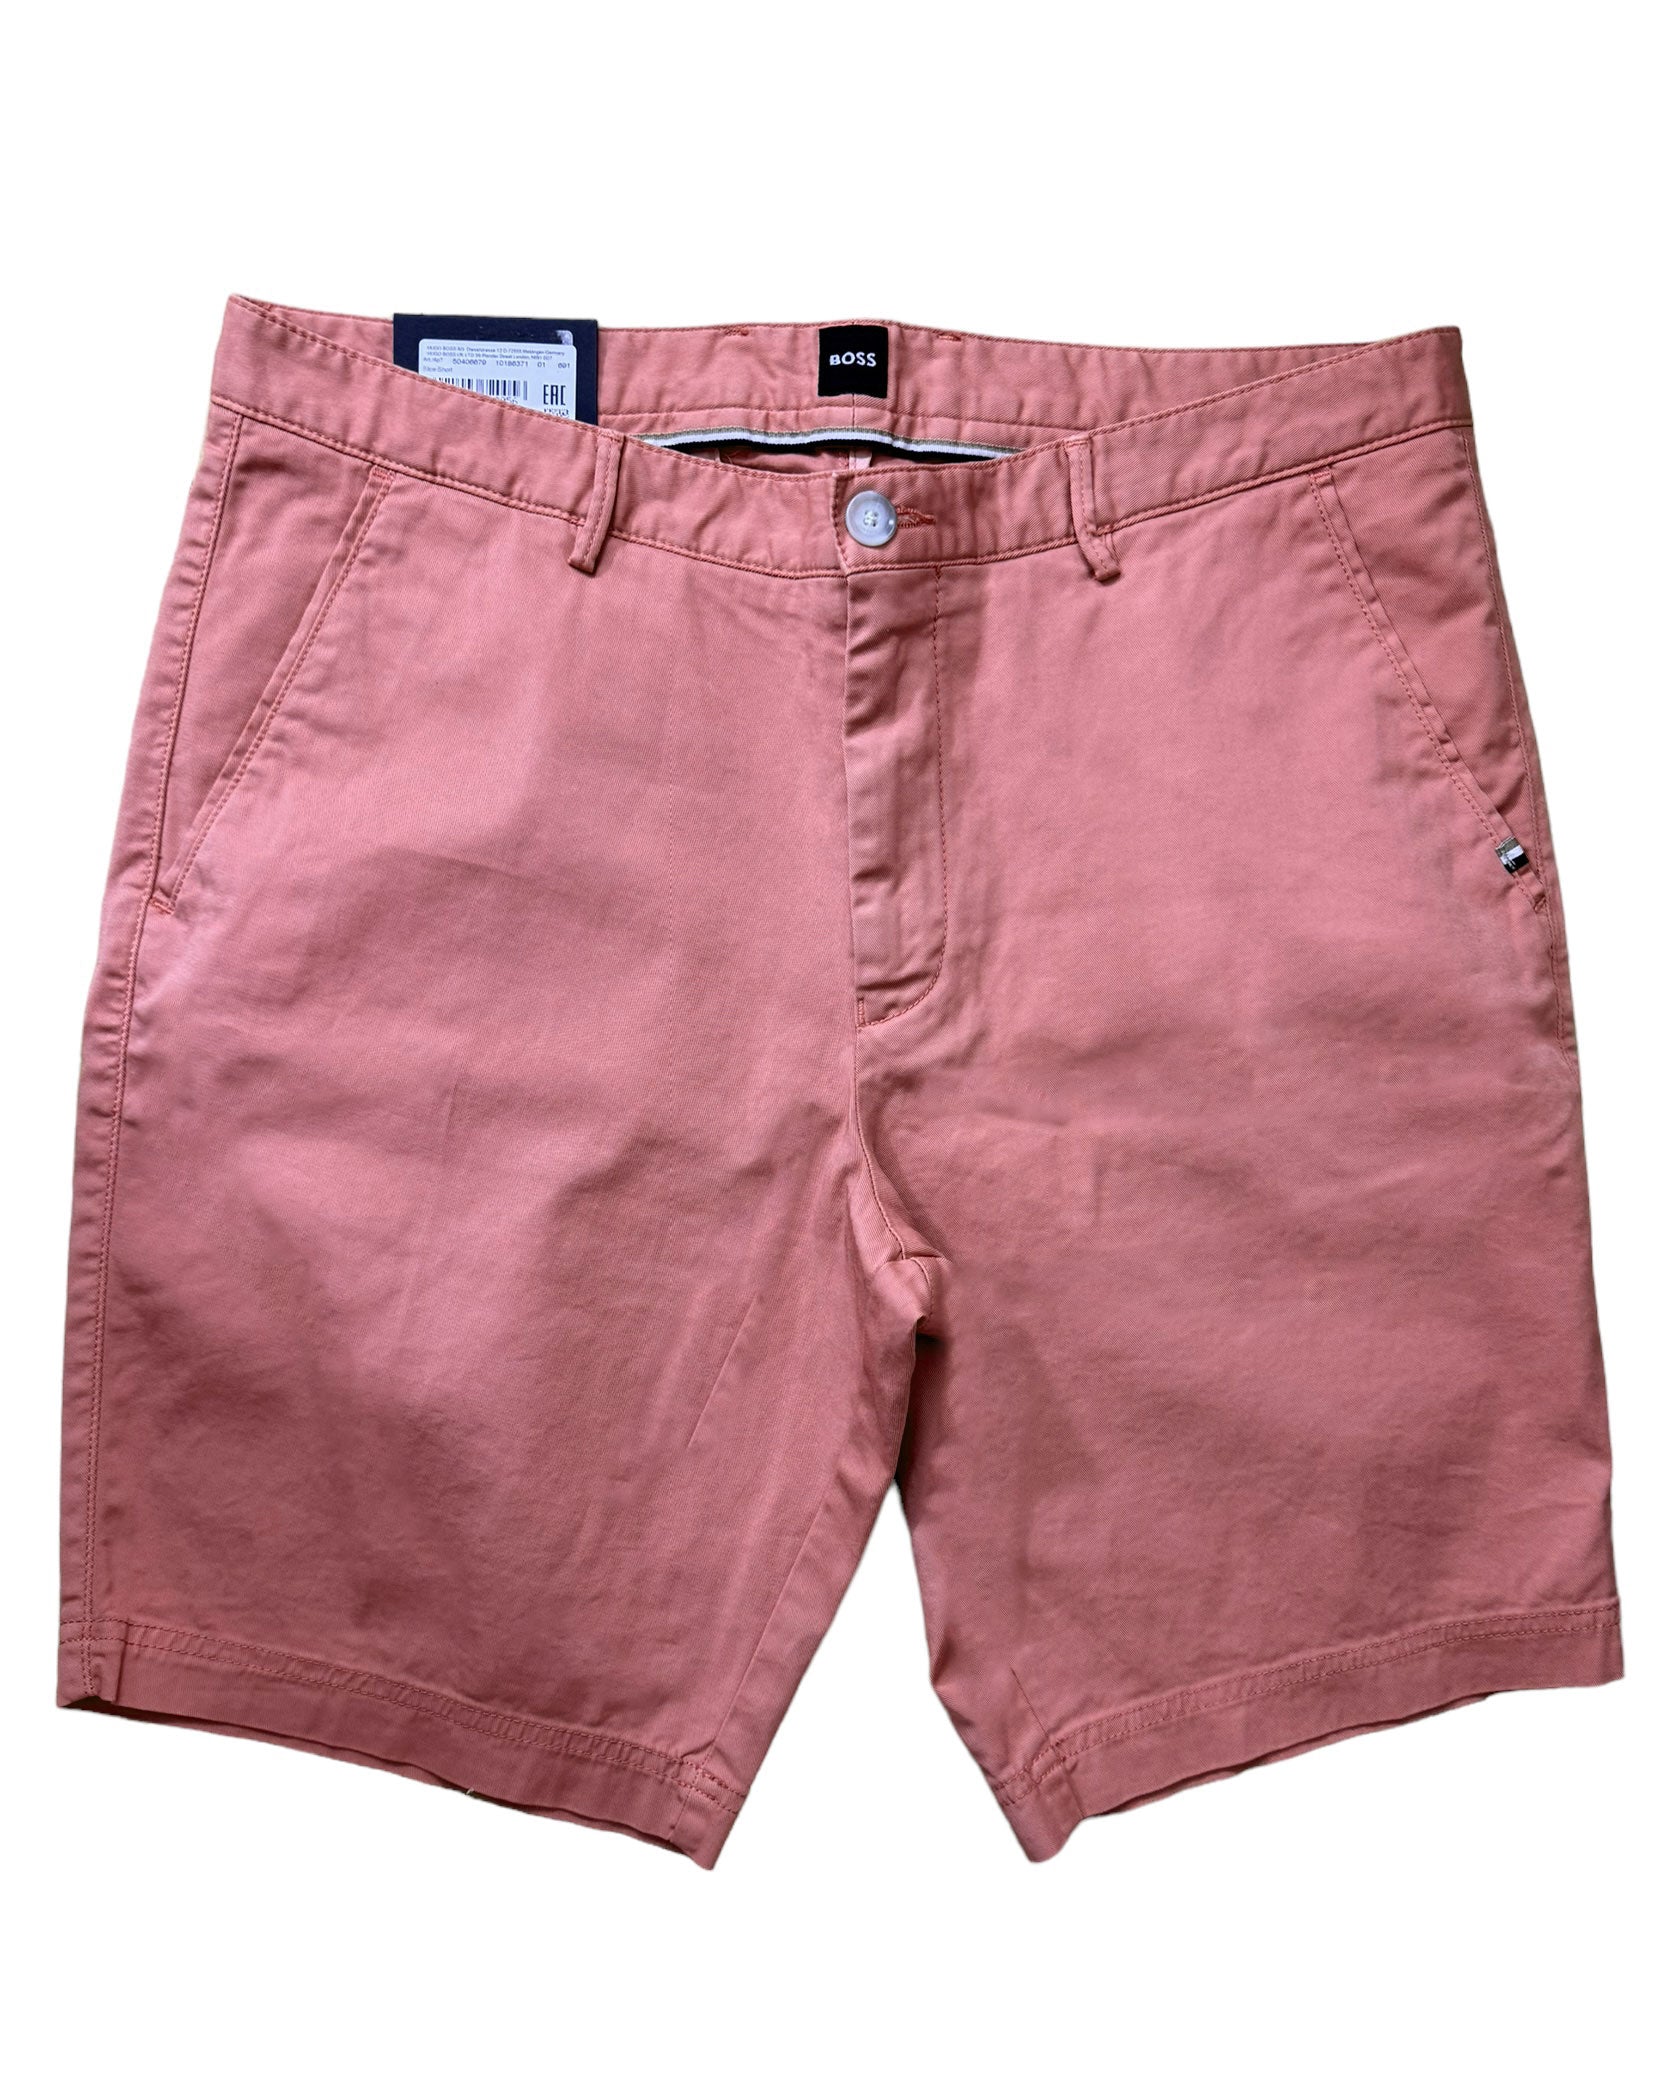 Hugo Boss Shorts Slim Fit Pink 